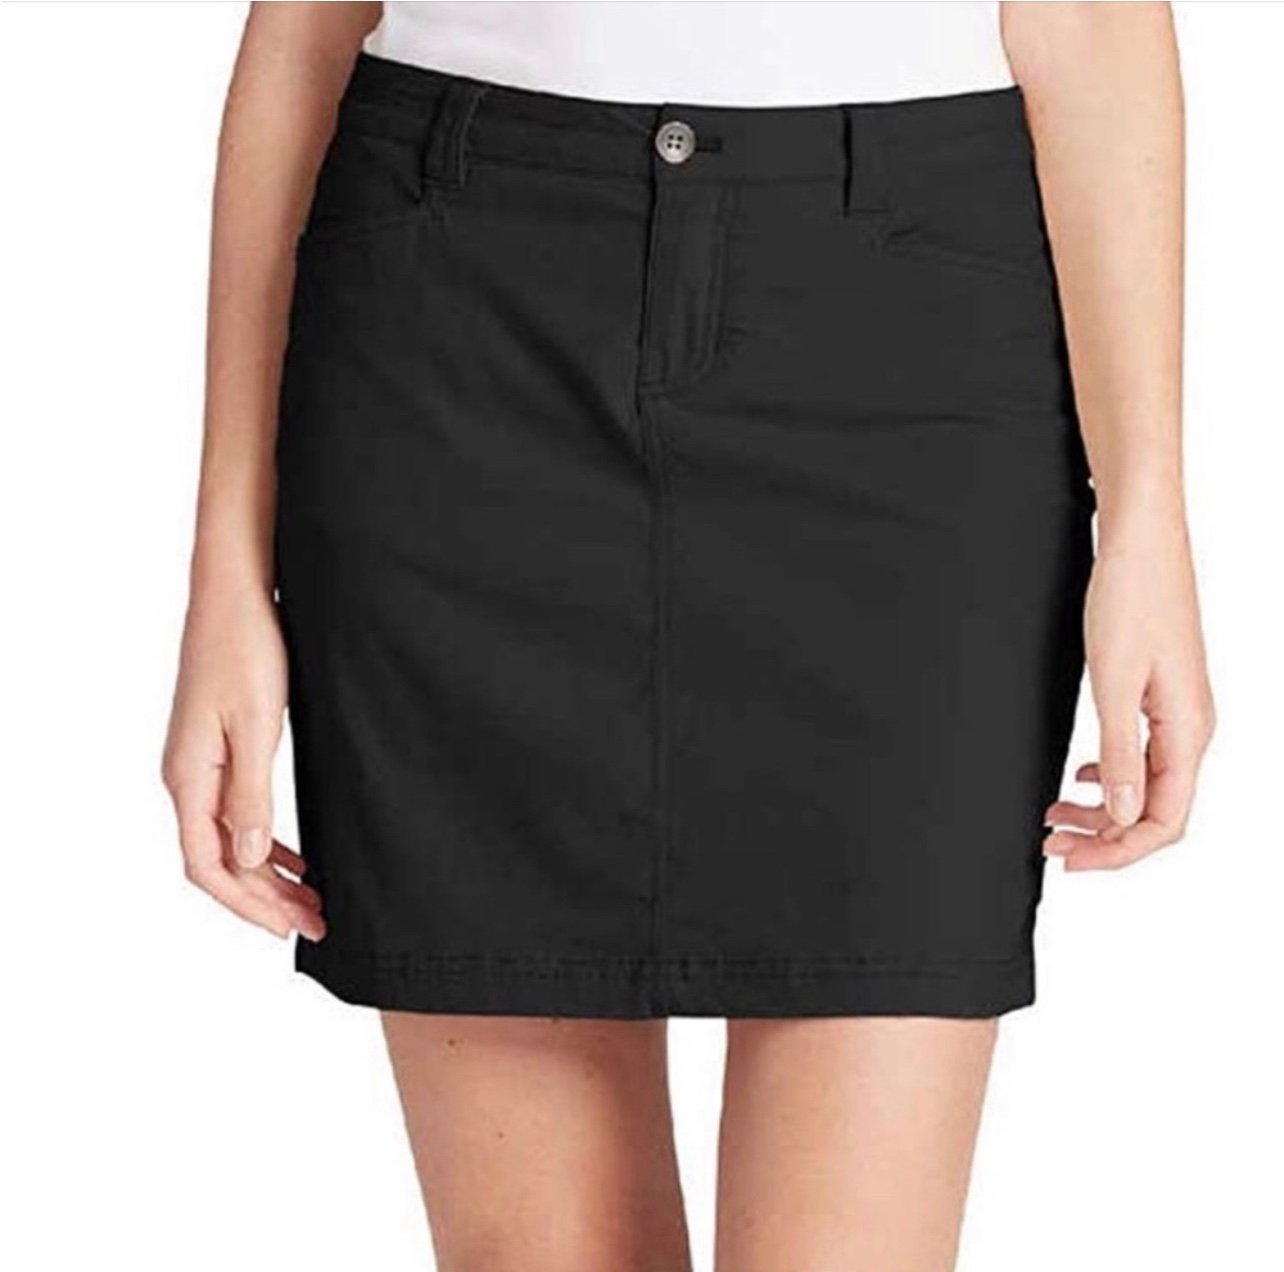 Gorgeous Eddie Bauer Black Adventurer Skirt Skort Size 8 gc4ud6Qjf outlet online shop